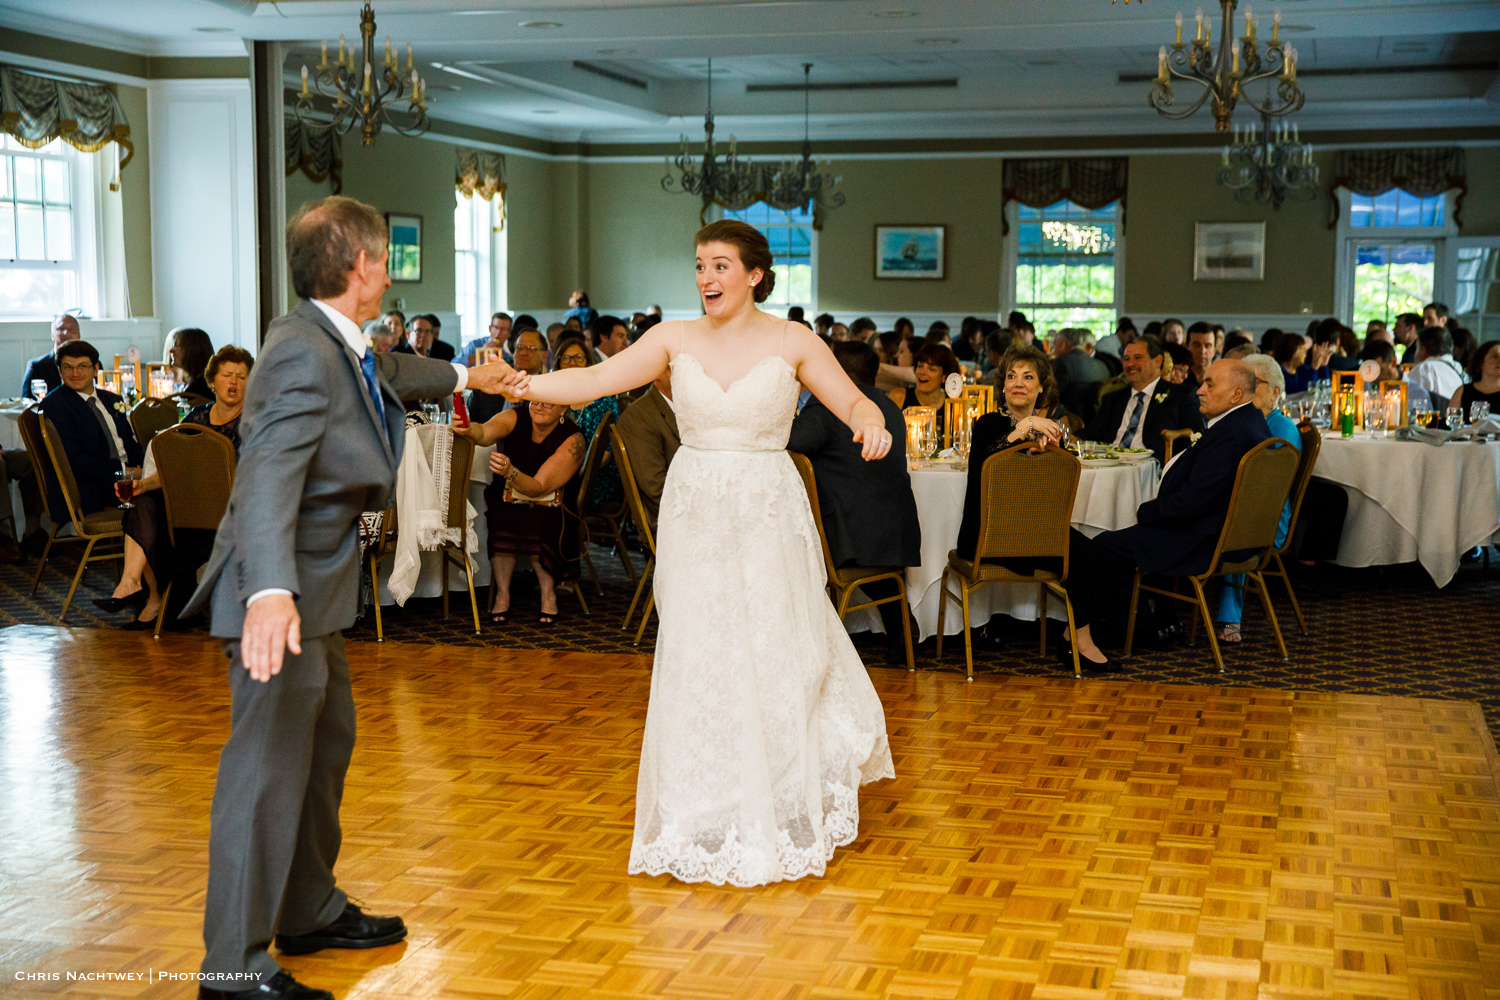 wedding-photos-united-states-coast-guard-academy-chris-nachtwey-photography-2019-27.jpg